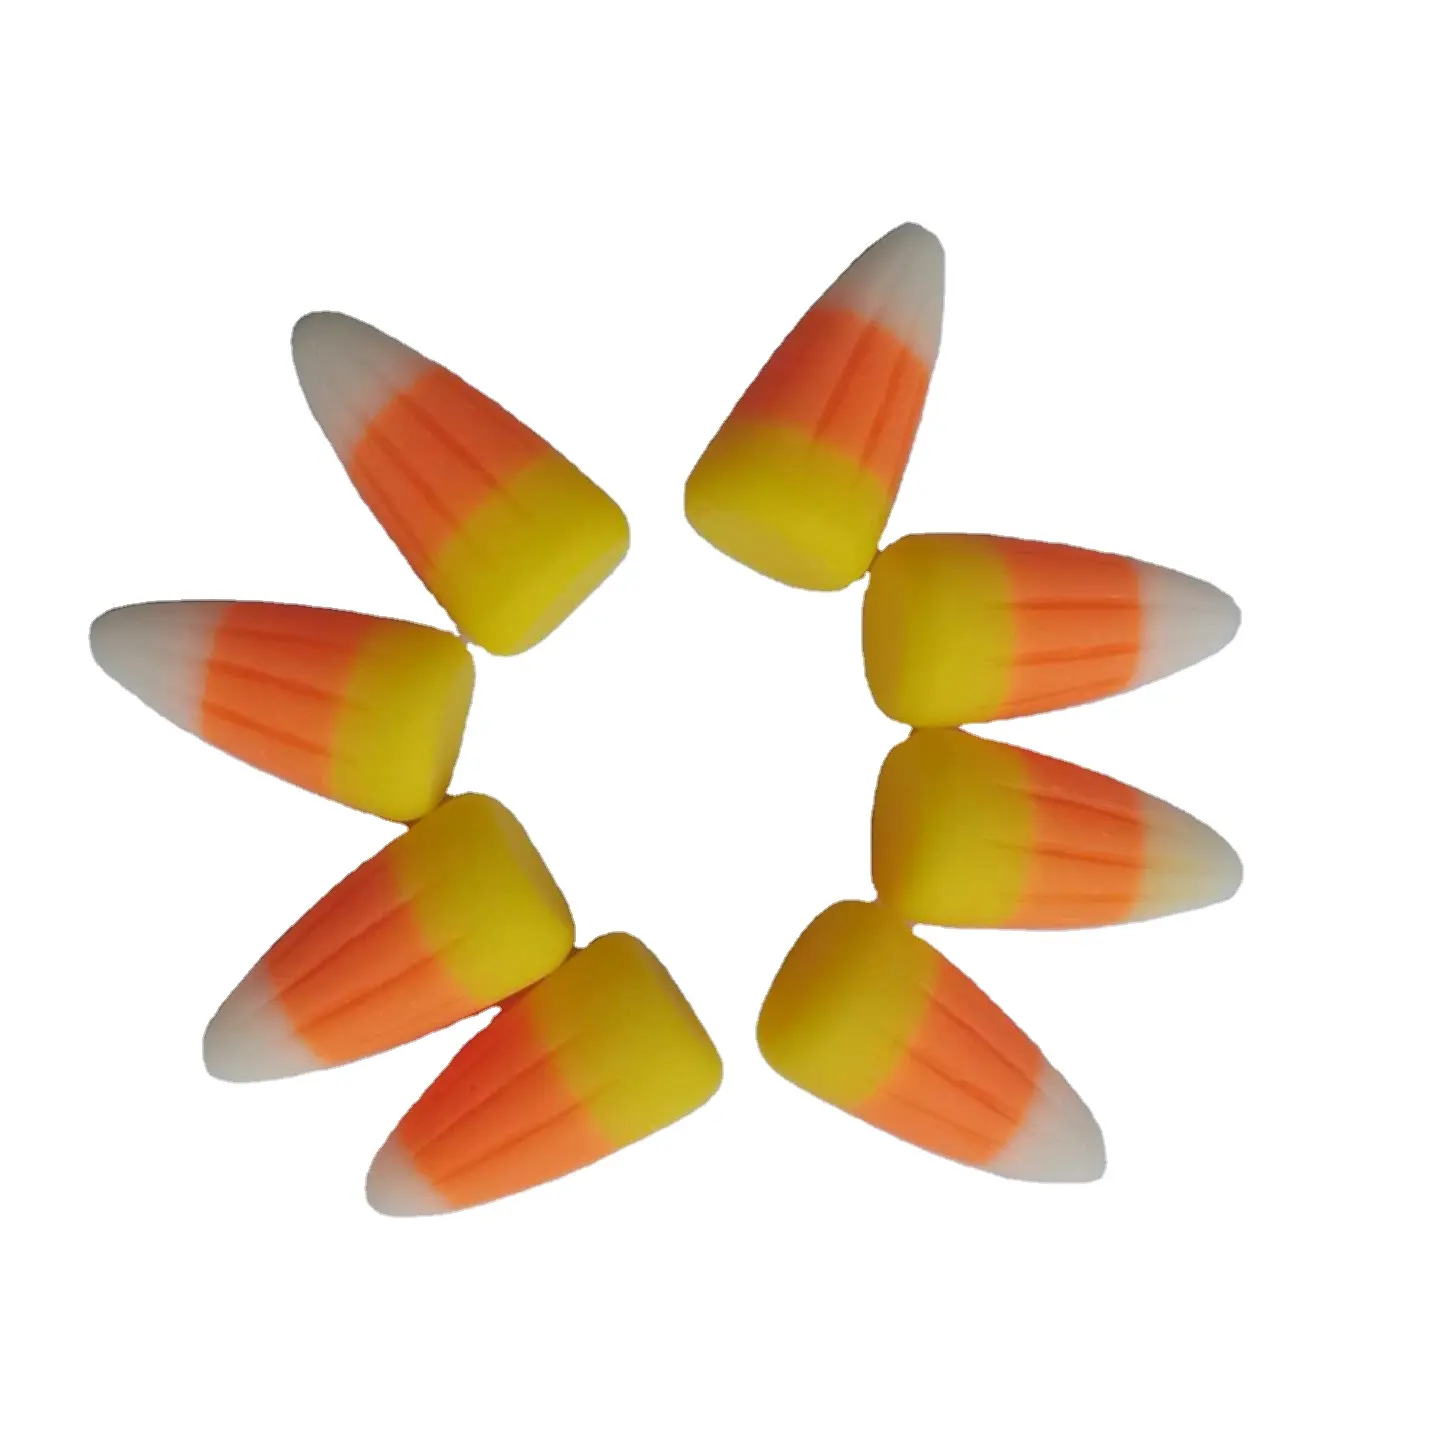 100PCS Resin Kawaii Simulation Flatback Candy Corn Cabochons Ornament Accessories DIY Embellishments Scrapbooking